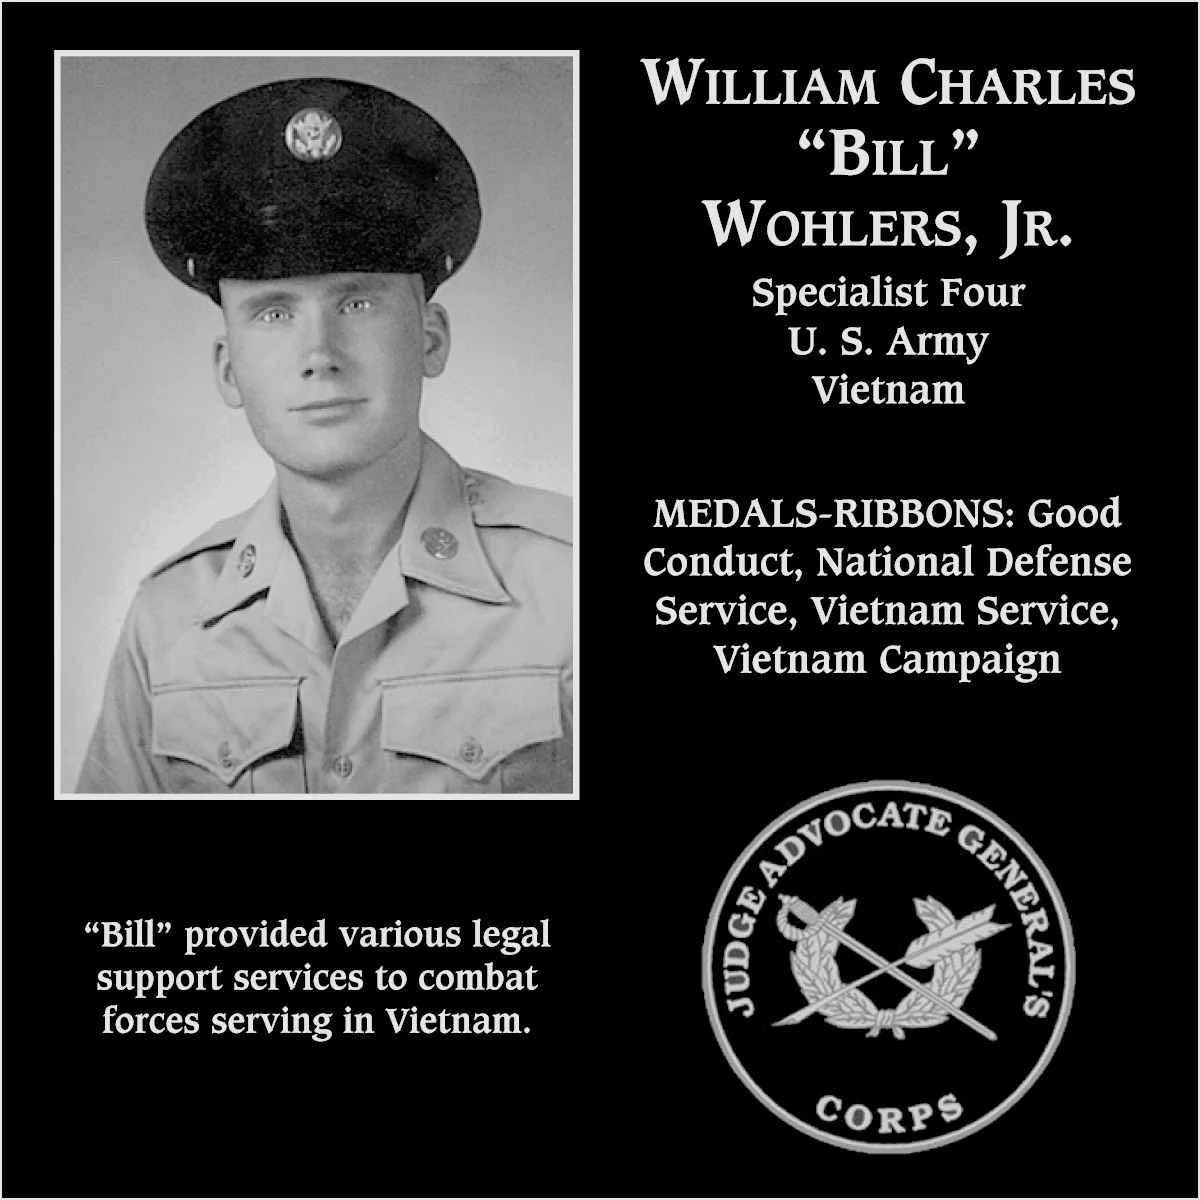 William Charles “Bill” Wohlers, jr